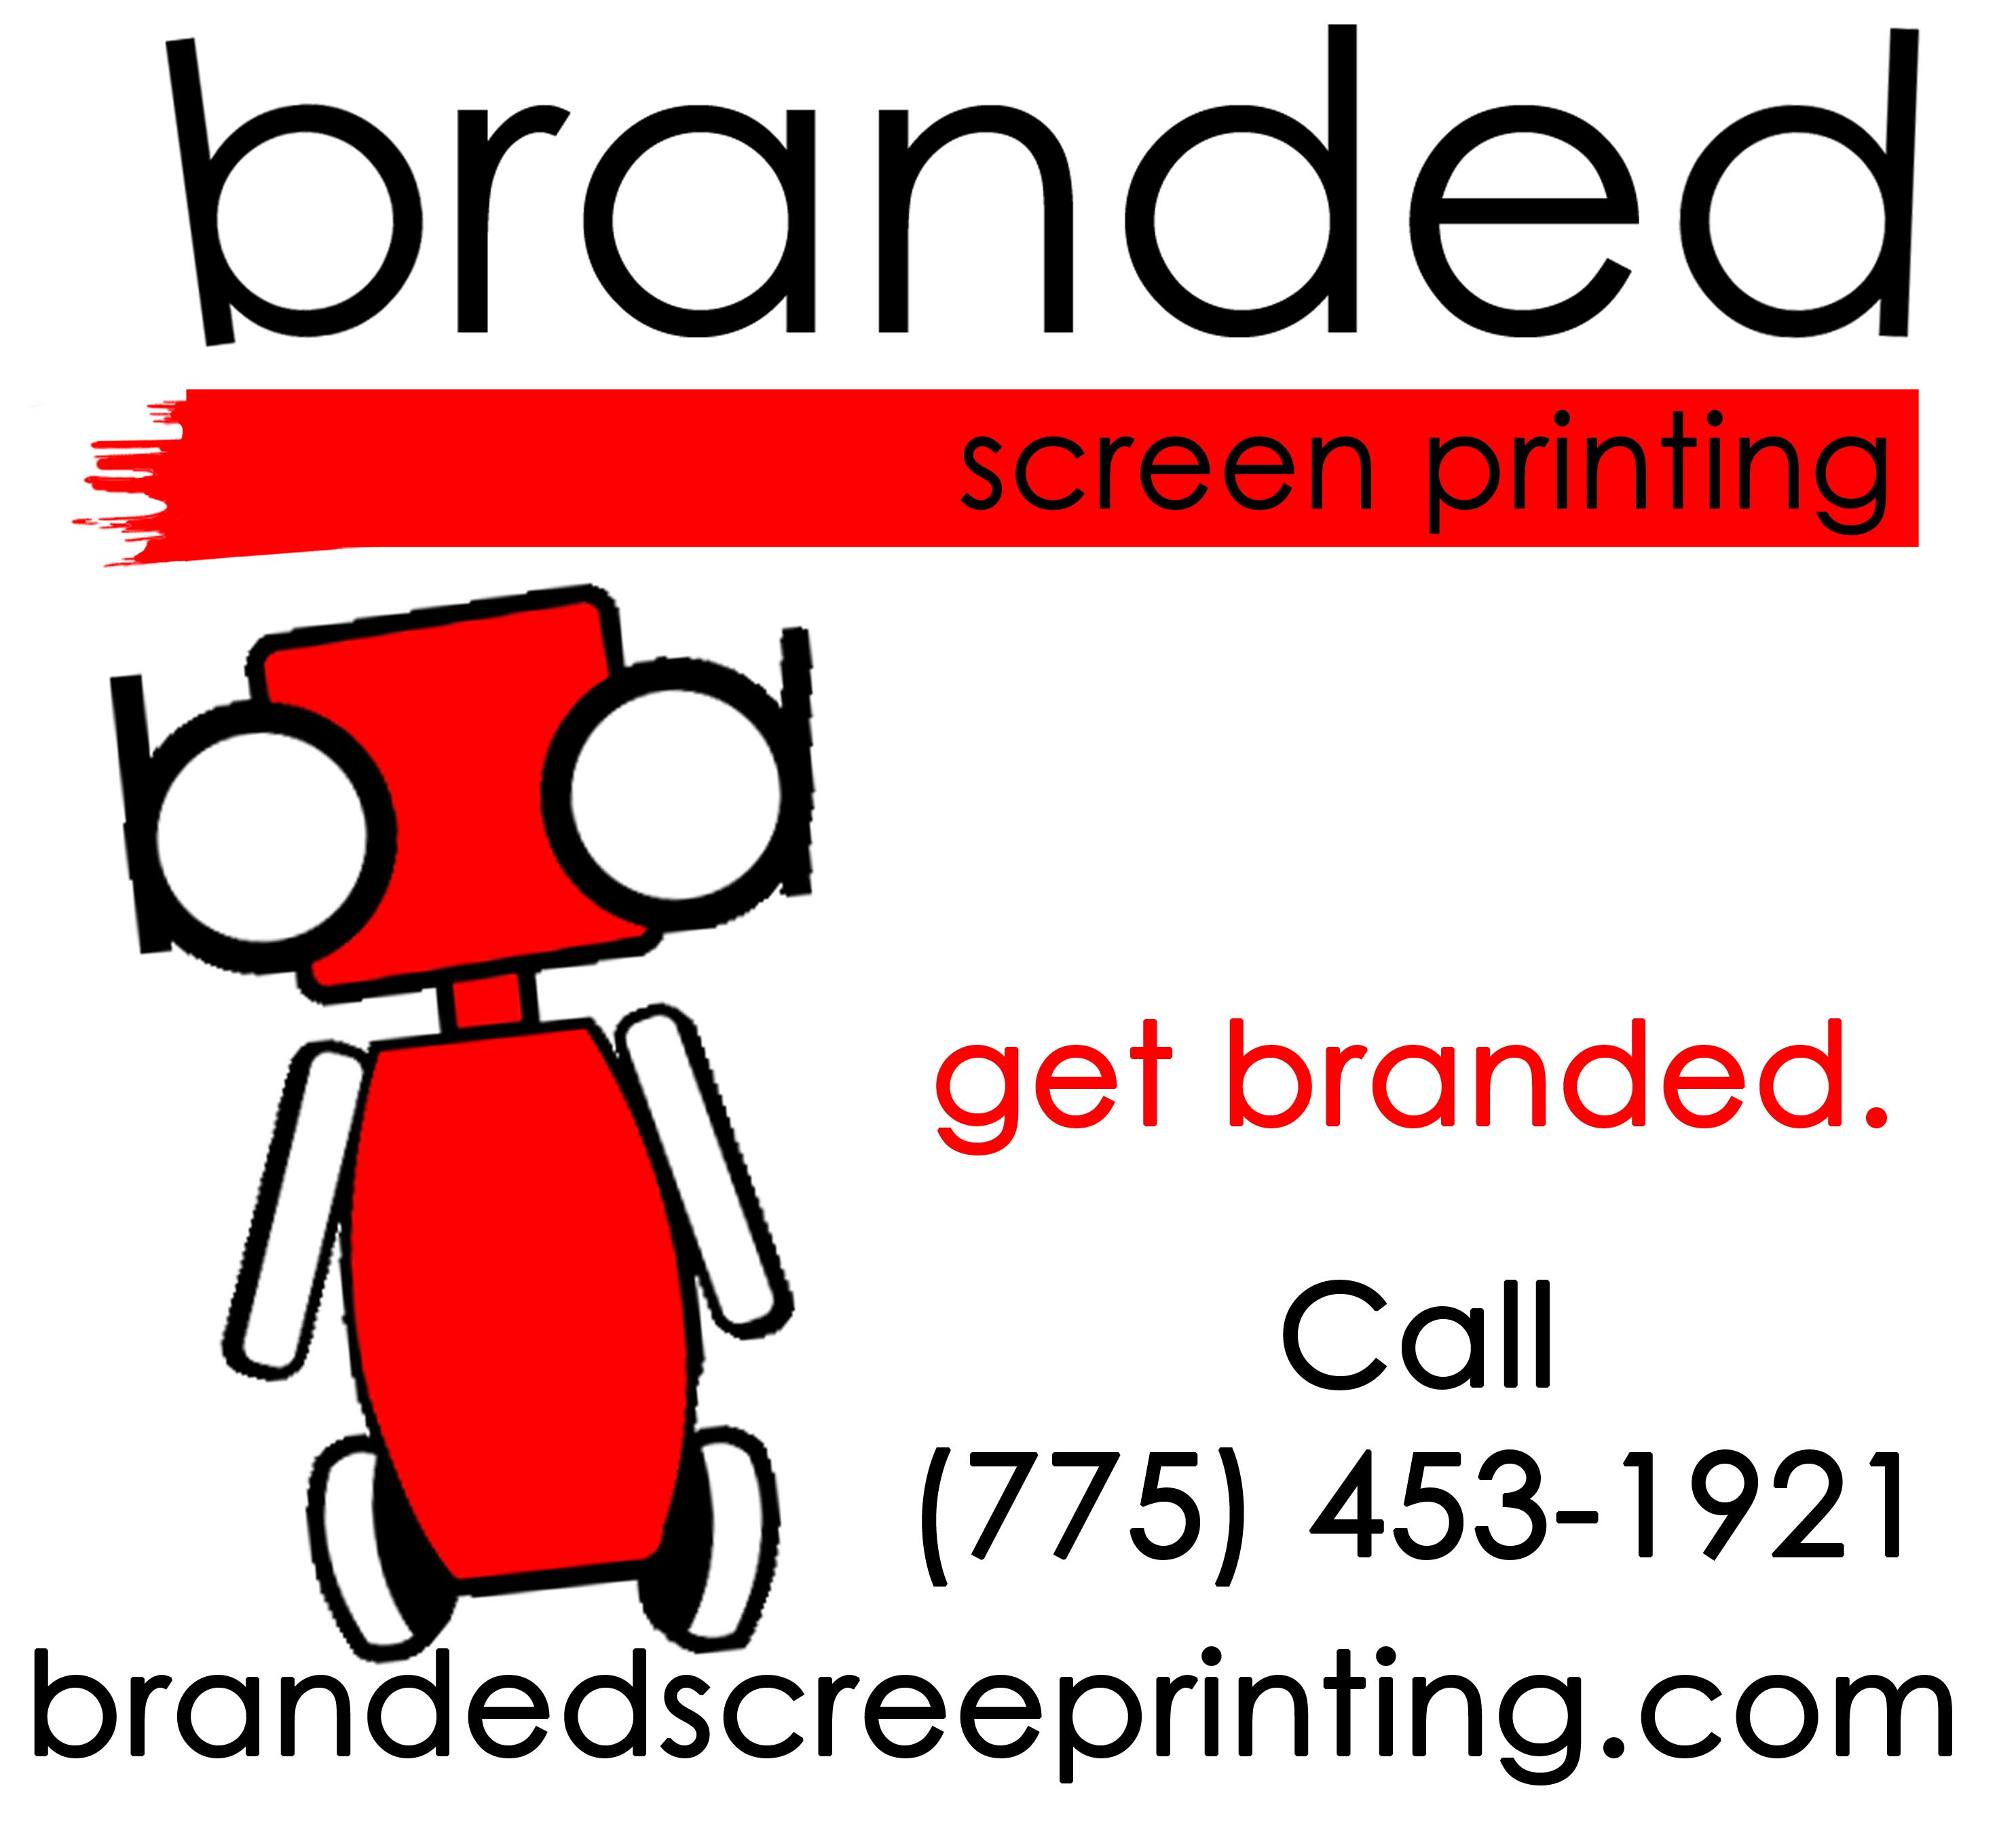 www.brandedscreenprinting.com